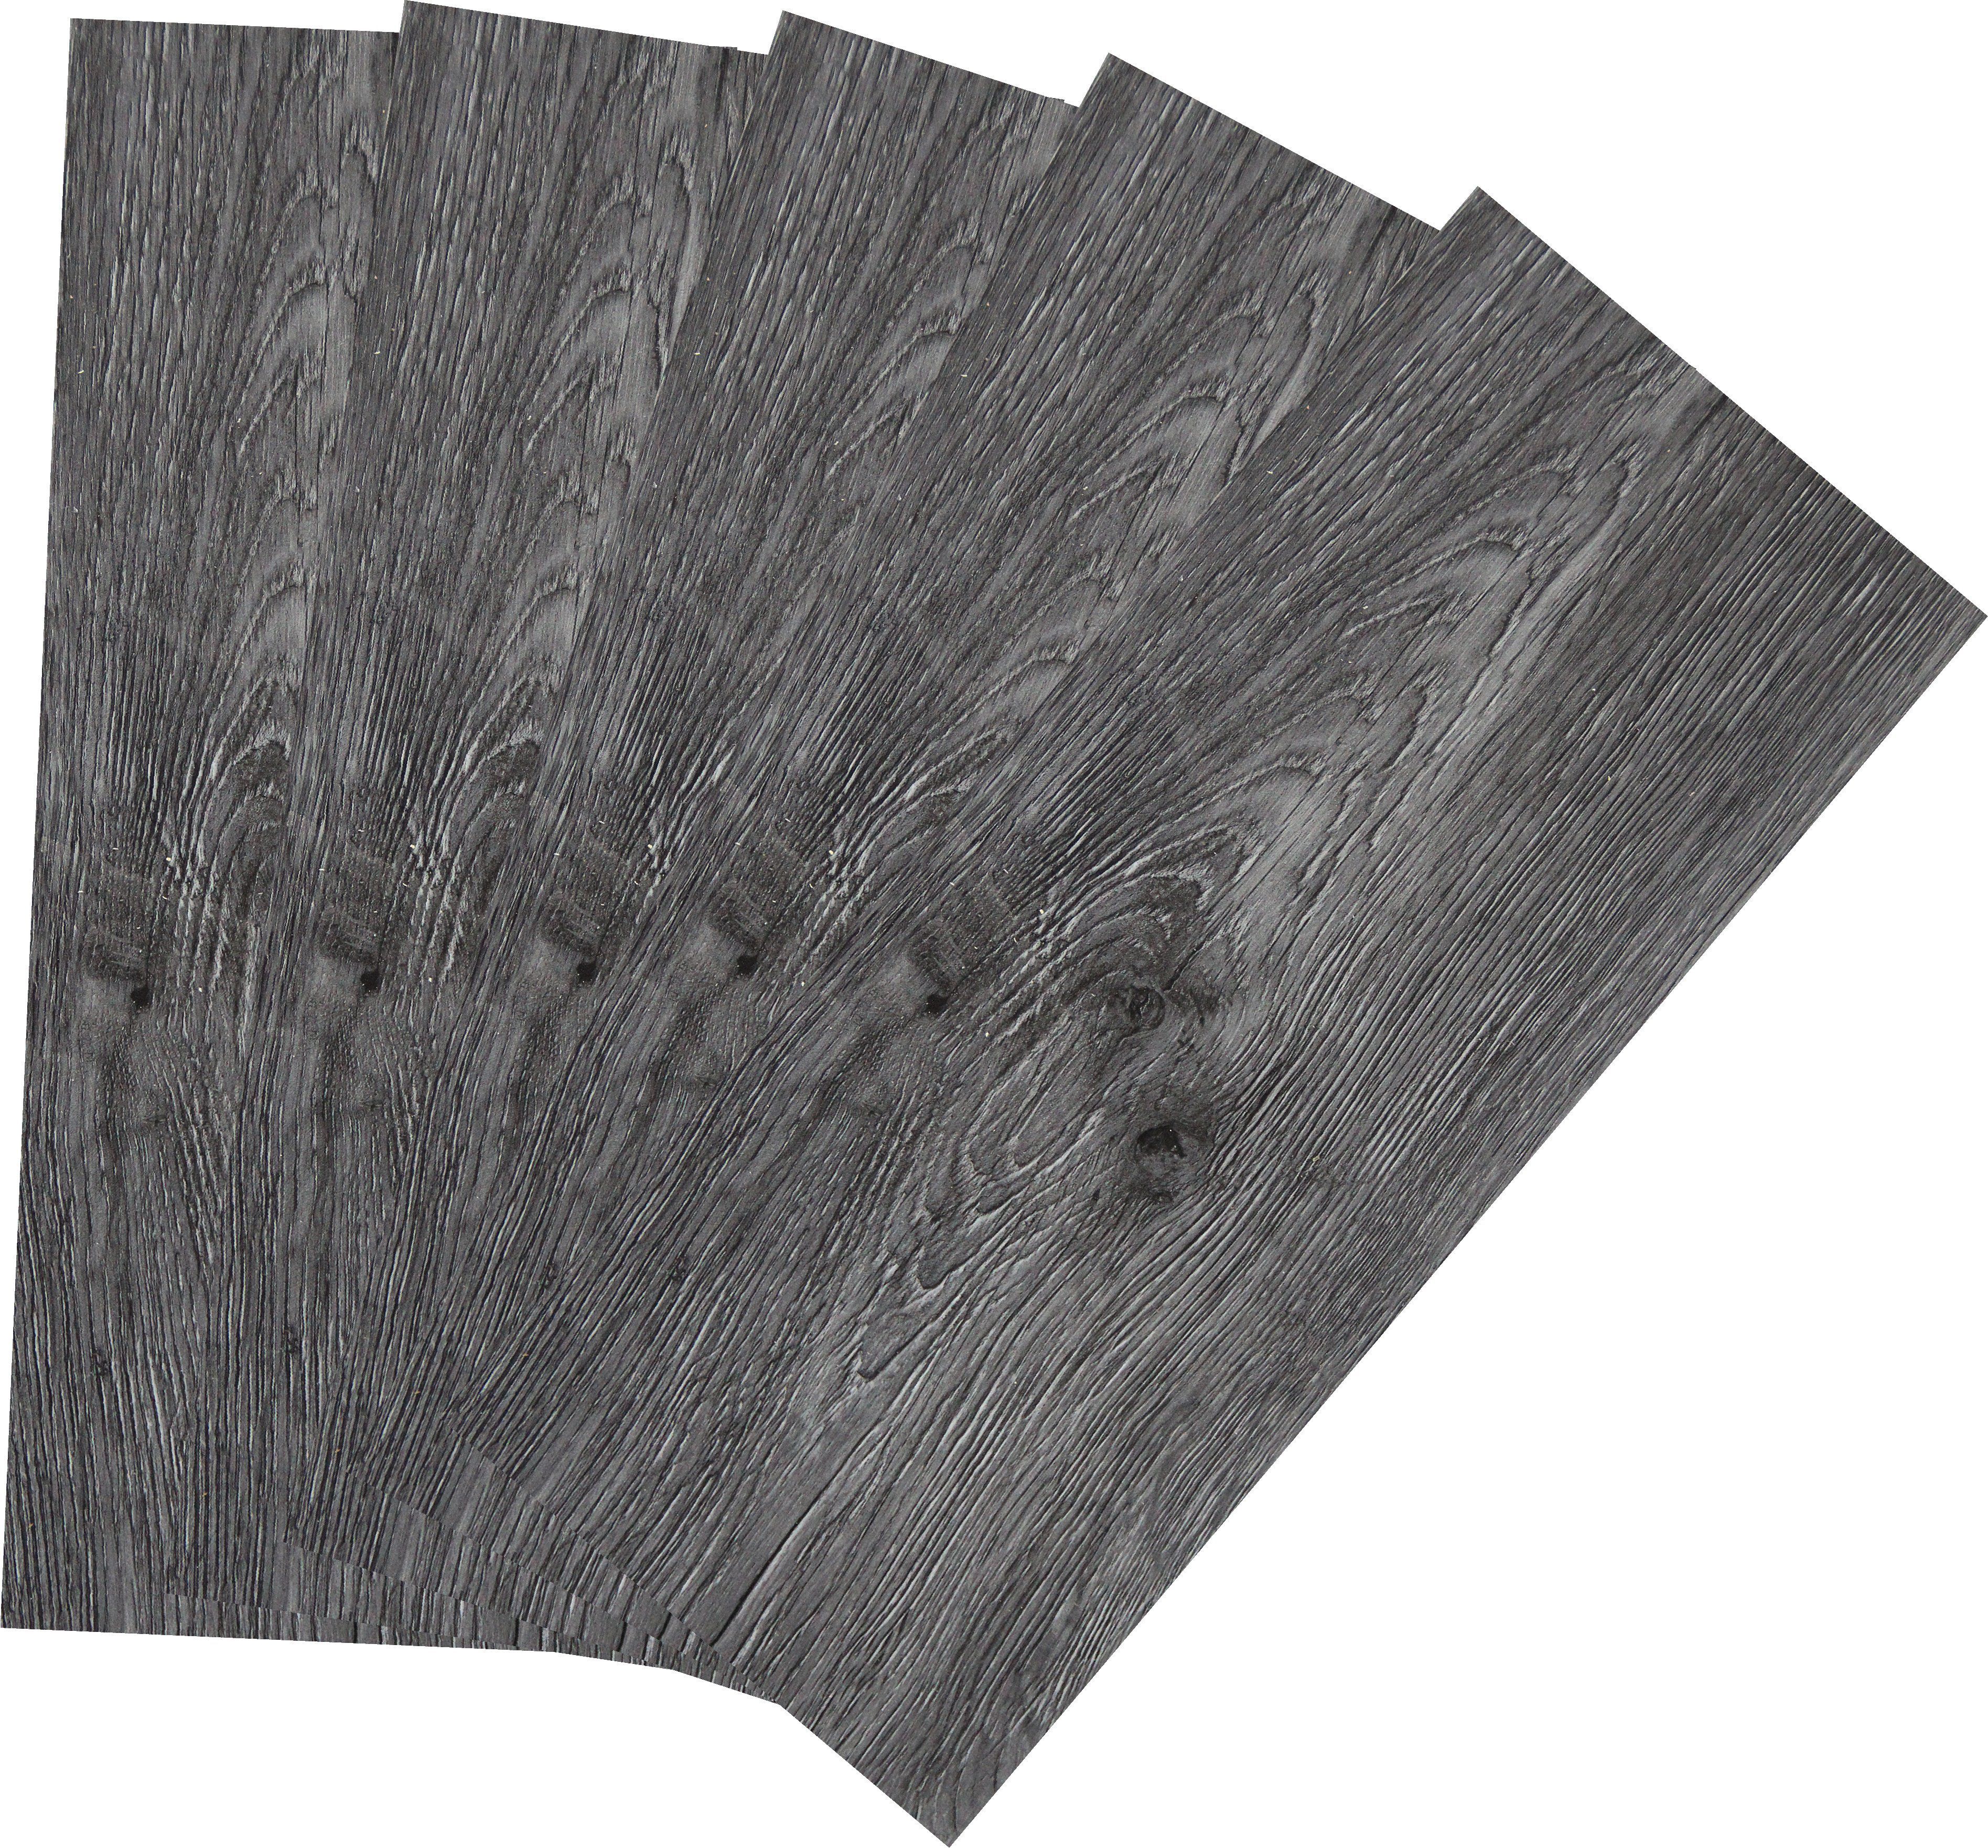 Charcoal Wood effect Vinyl tile Pack of 20